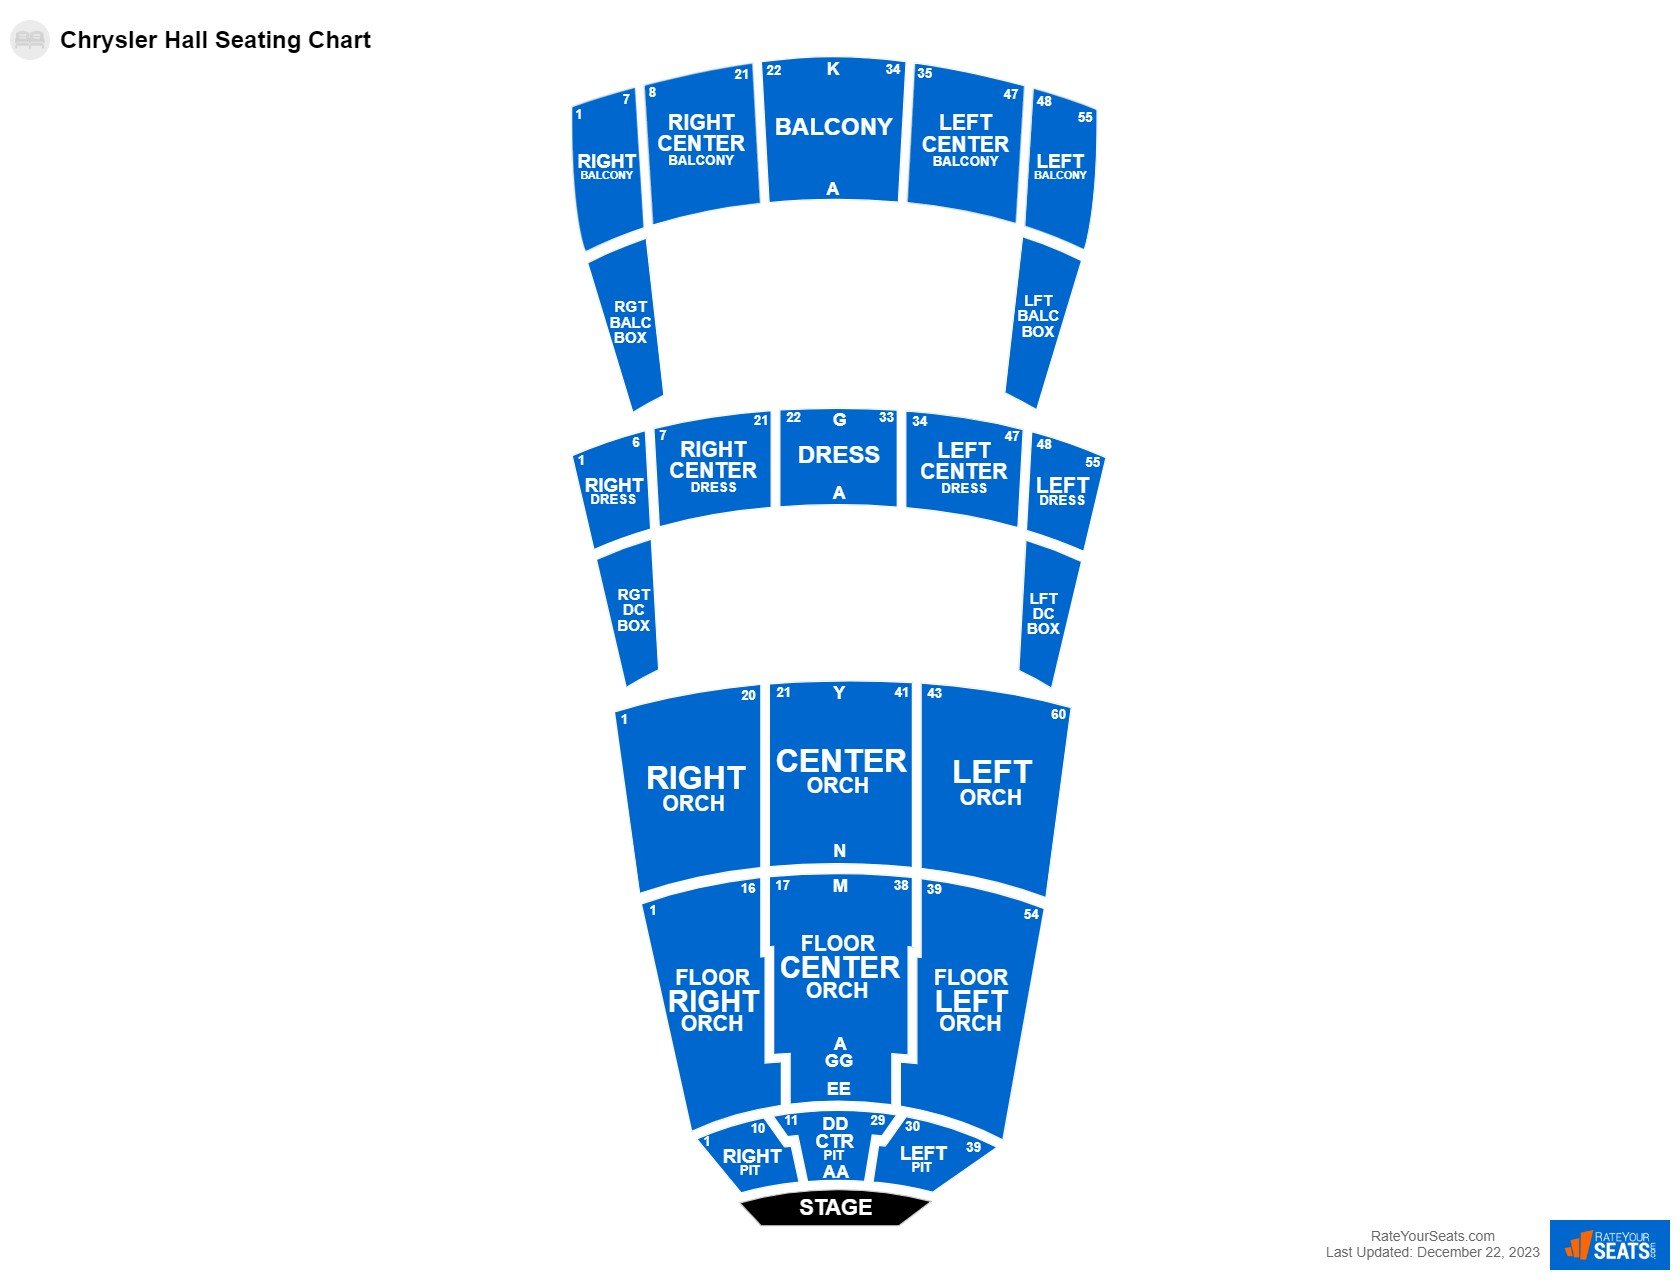 Concert seating chart at Chrysler Hall